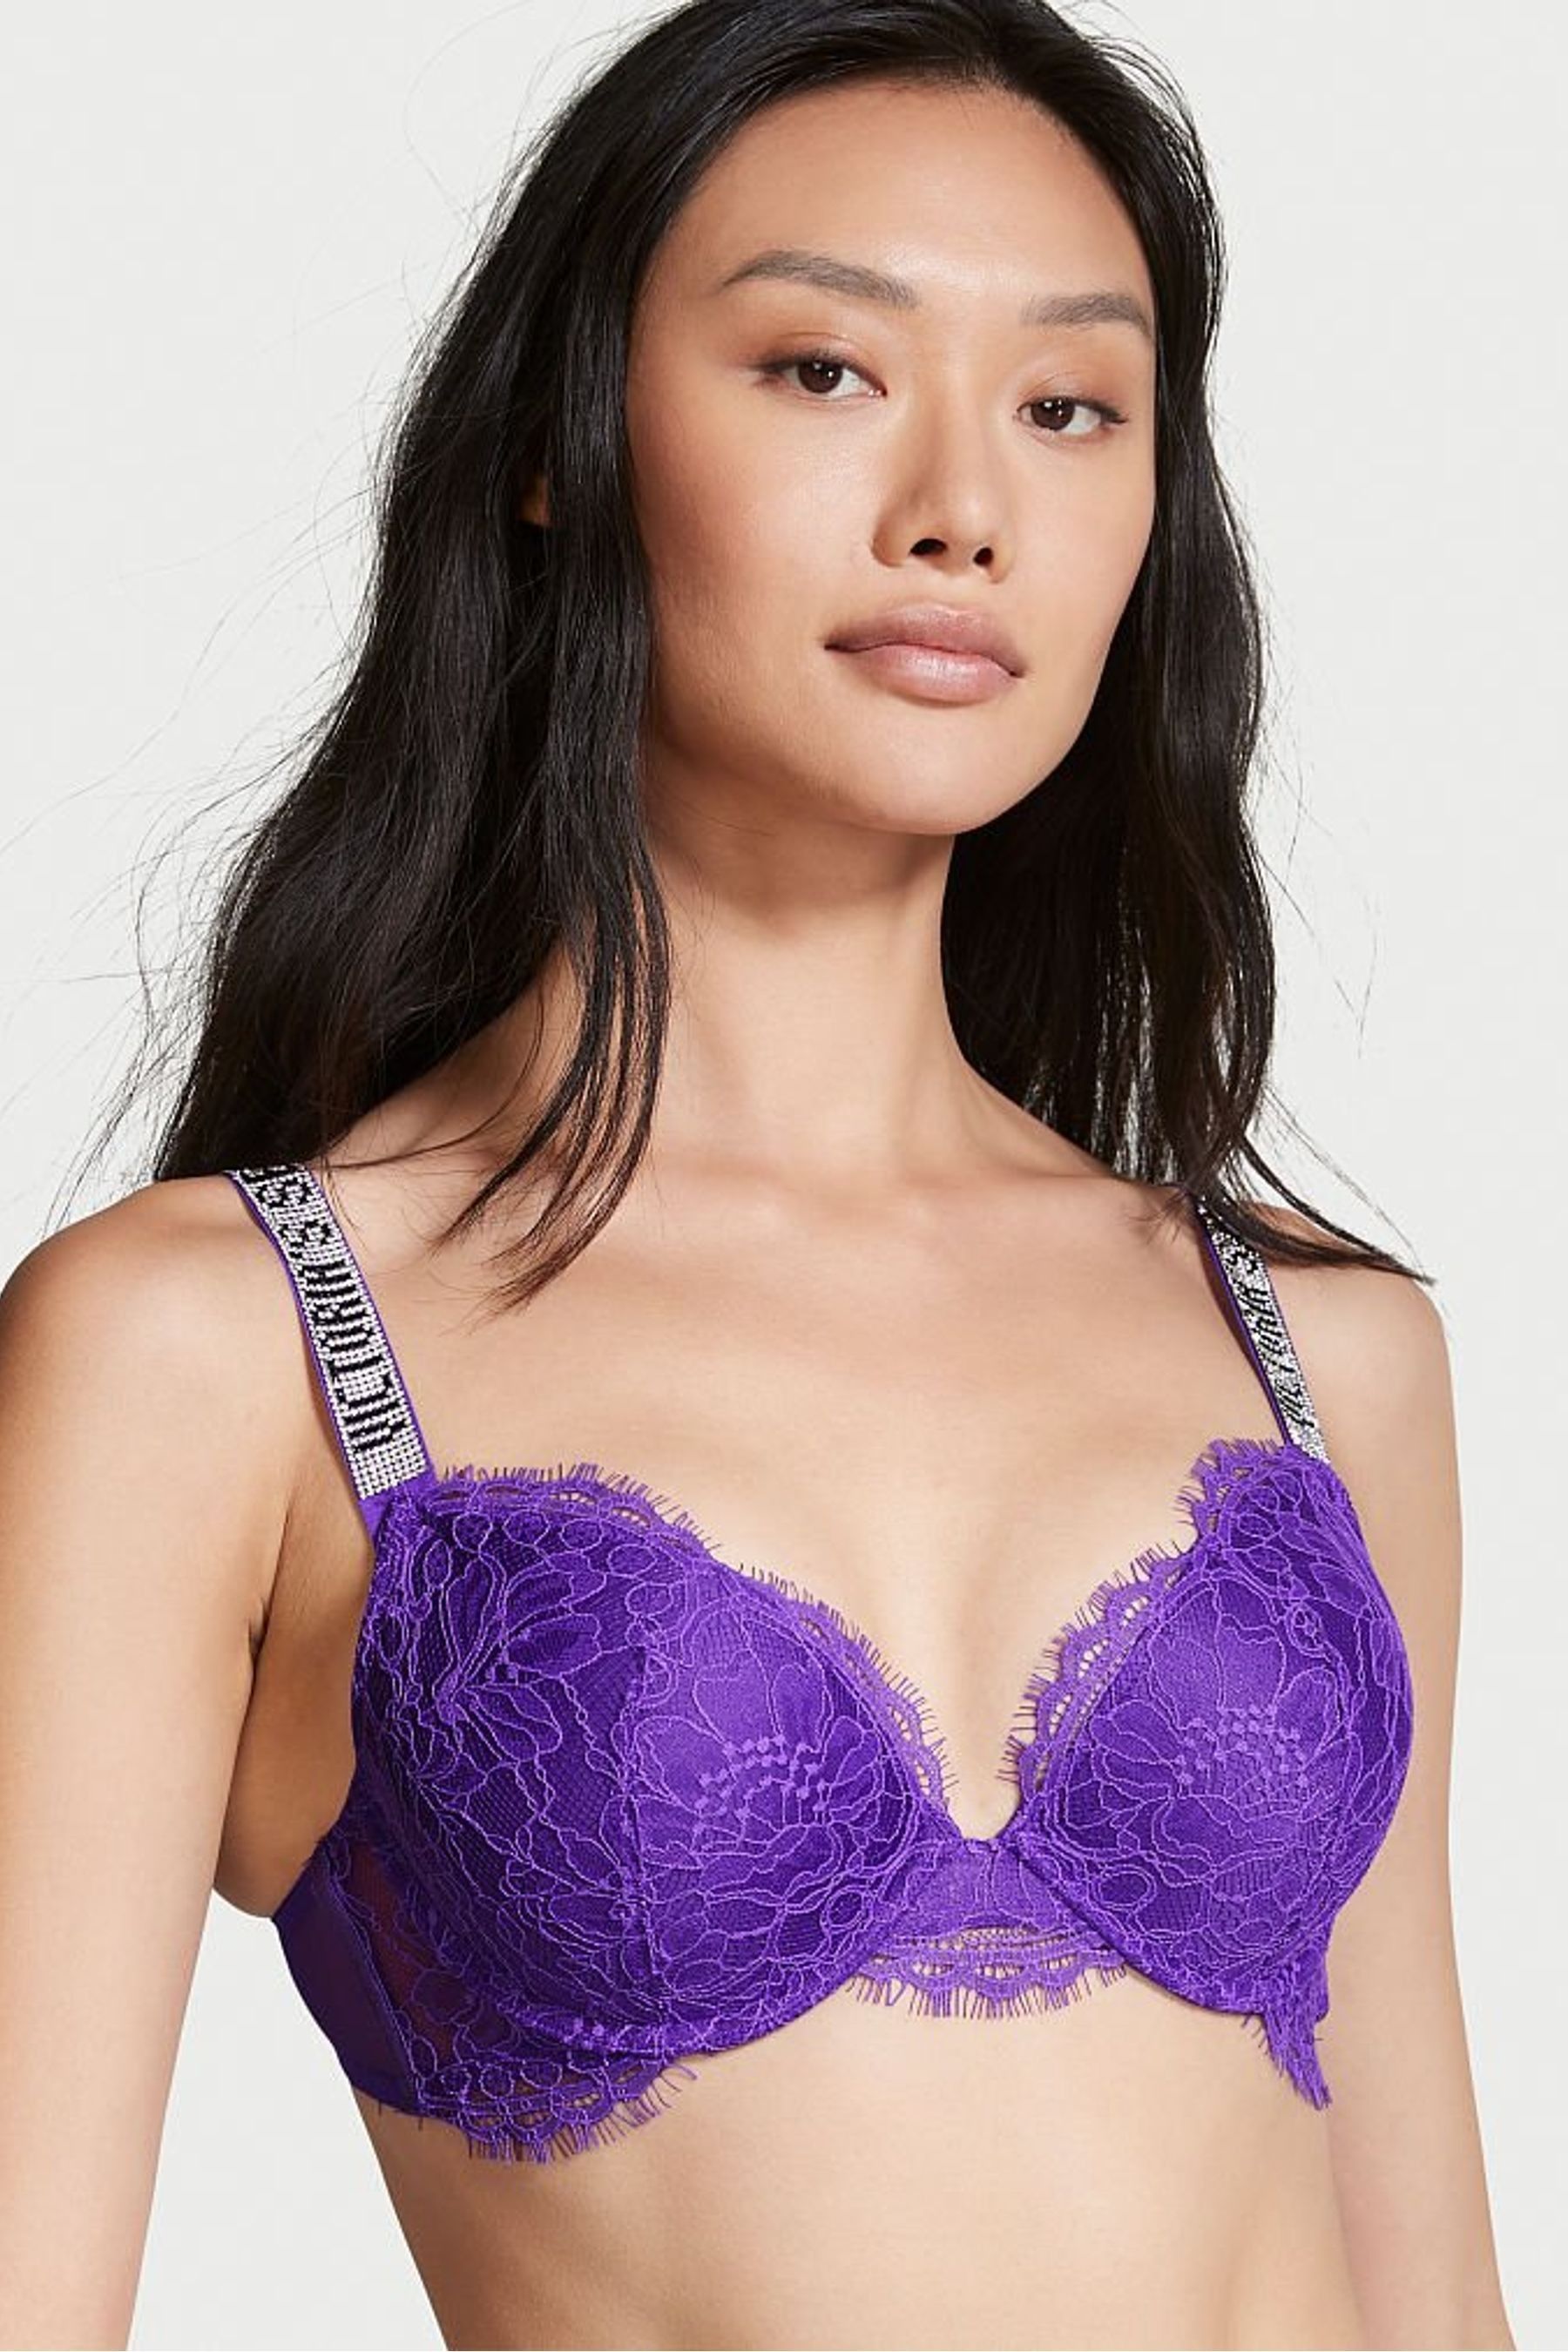 Buy Victoria S Secret Bright Violet Purple Lace Shine Strap Plunge Push Up Bra From The Victoria